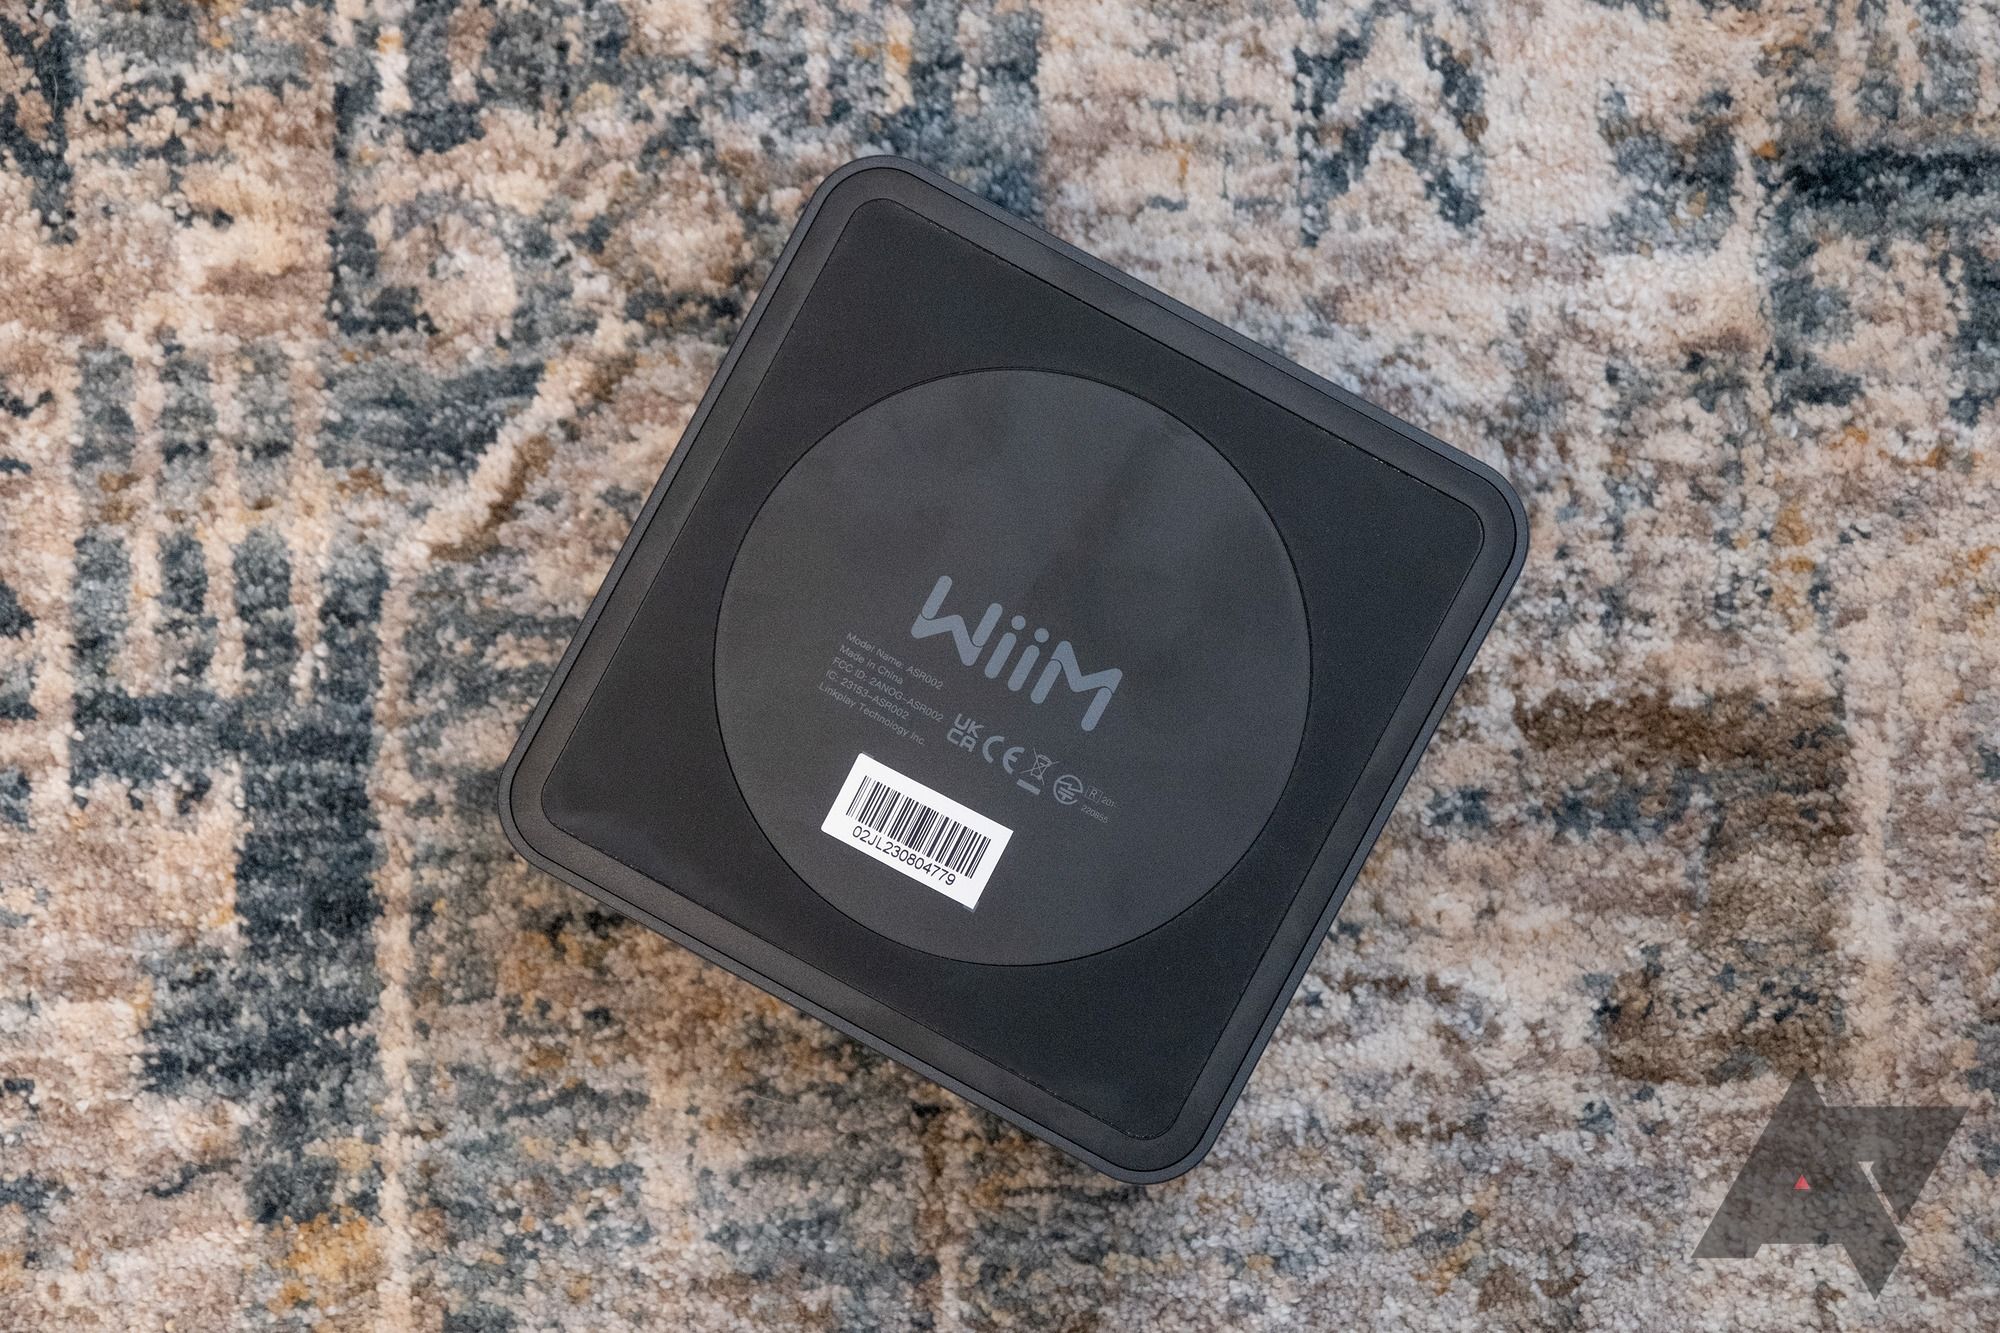 Finally, a HiFi alternative to Chromecast Audio: WiiM - RouteNote Blog